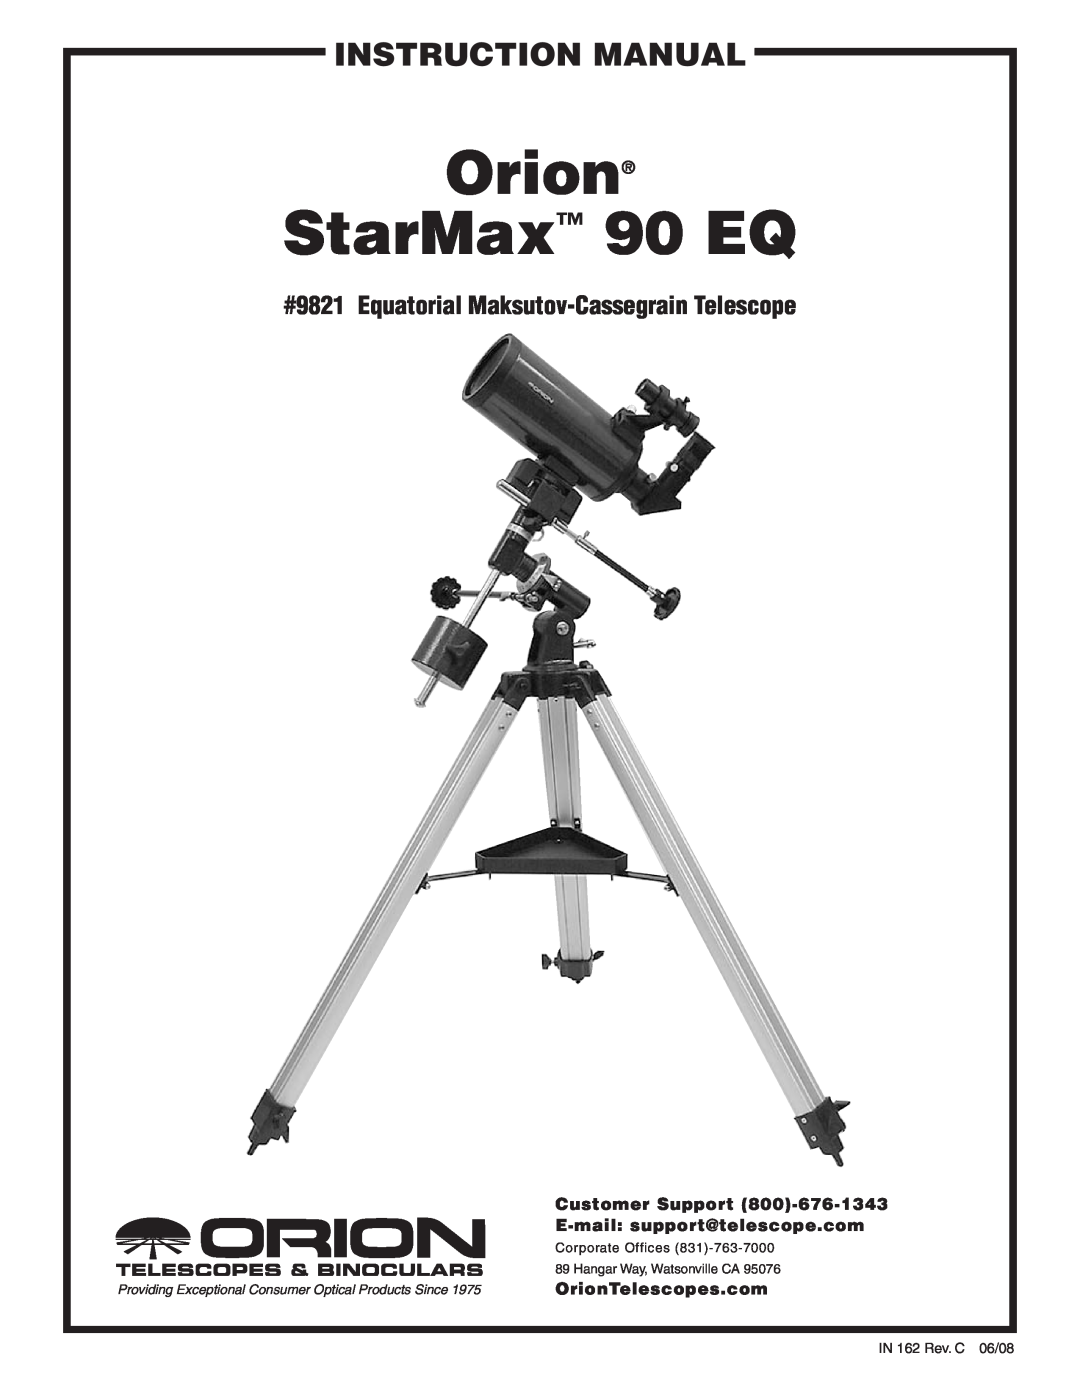 Orion instruction manual Orion StarMax 90 EQ, #9821 Equatorial Maksutov-Cassegrain Telescope, OrionTelescopes.com 